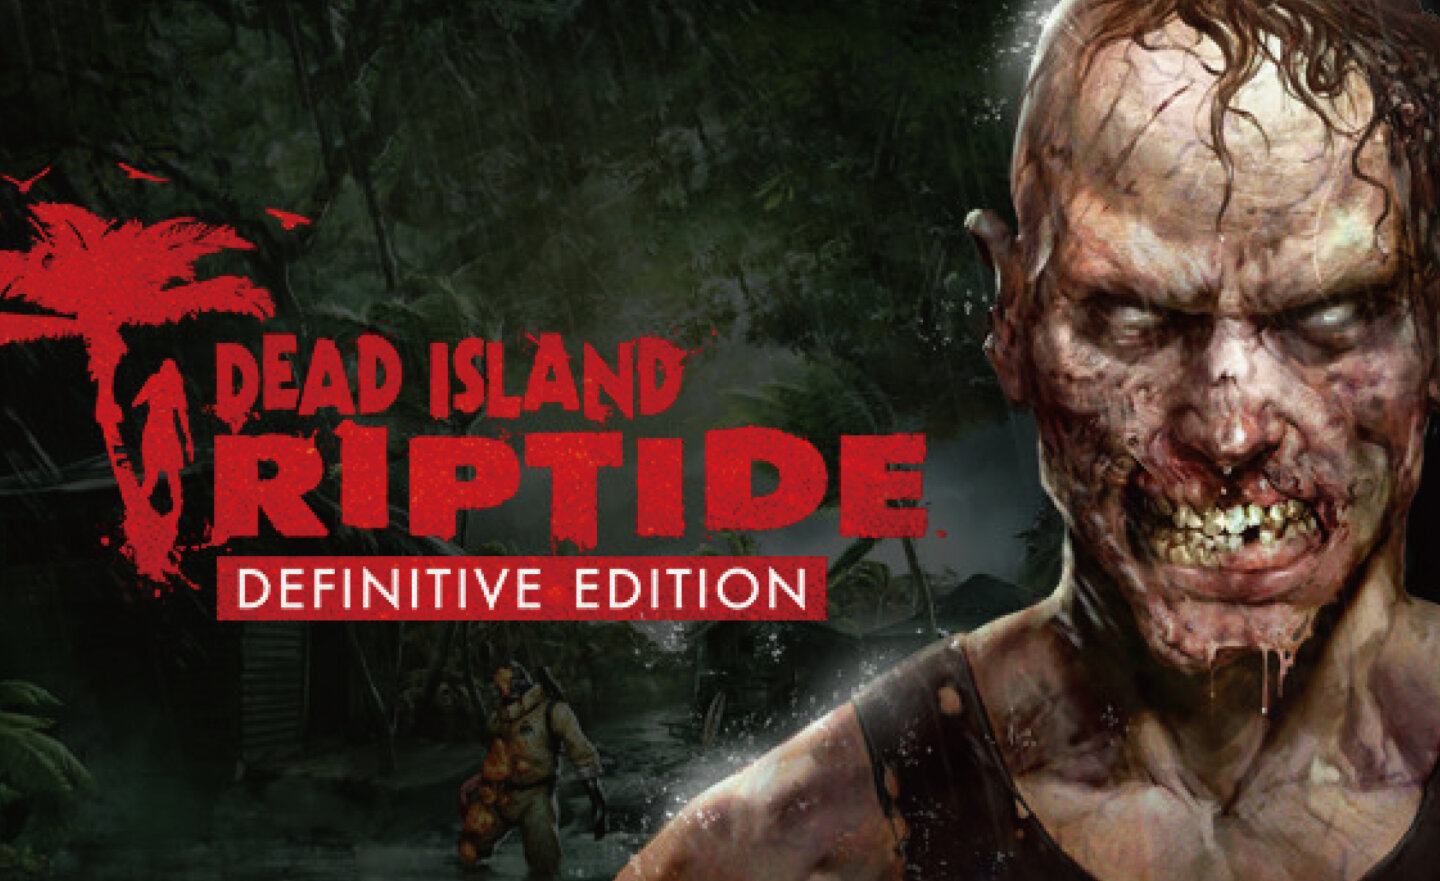 【限時免費】Steam 放送喪屍動作遊戲《Dead Island: Riptide Definitive Edition》，2 月 16 日 上午 12:00 前永久保留